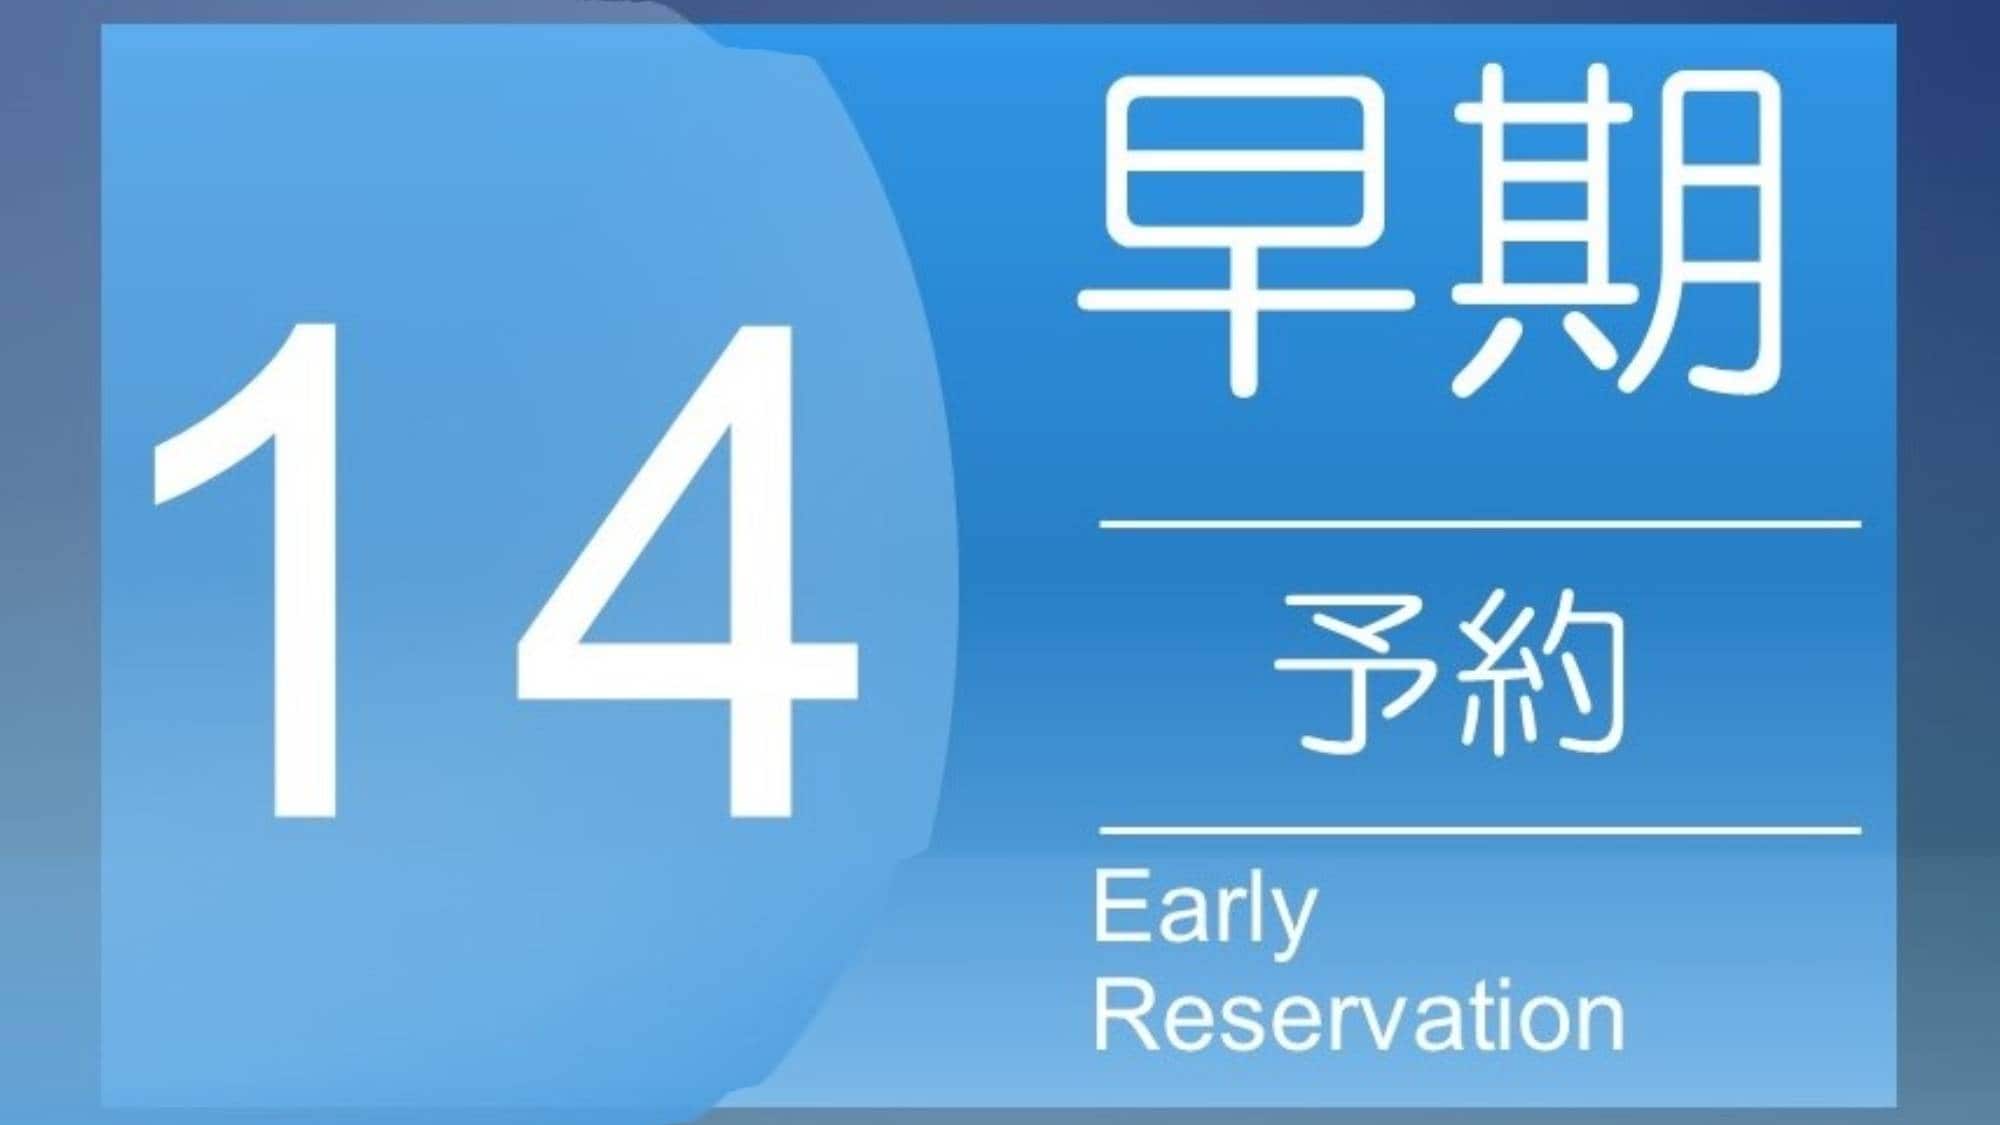 14 Advance reservation